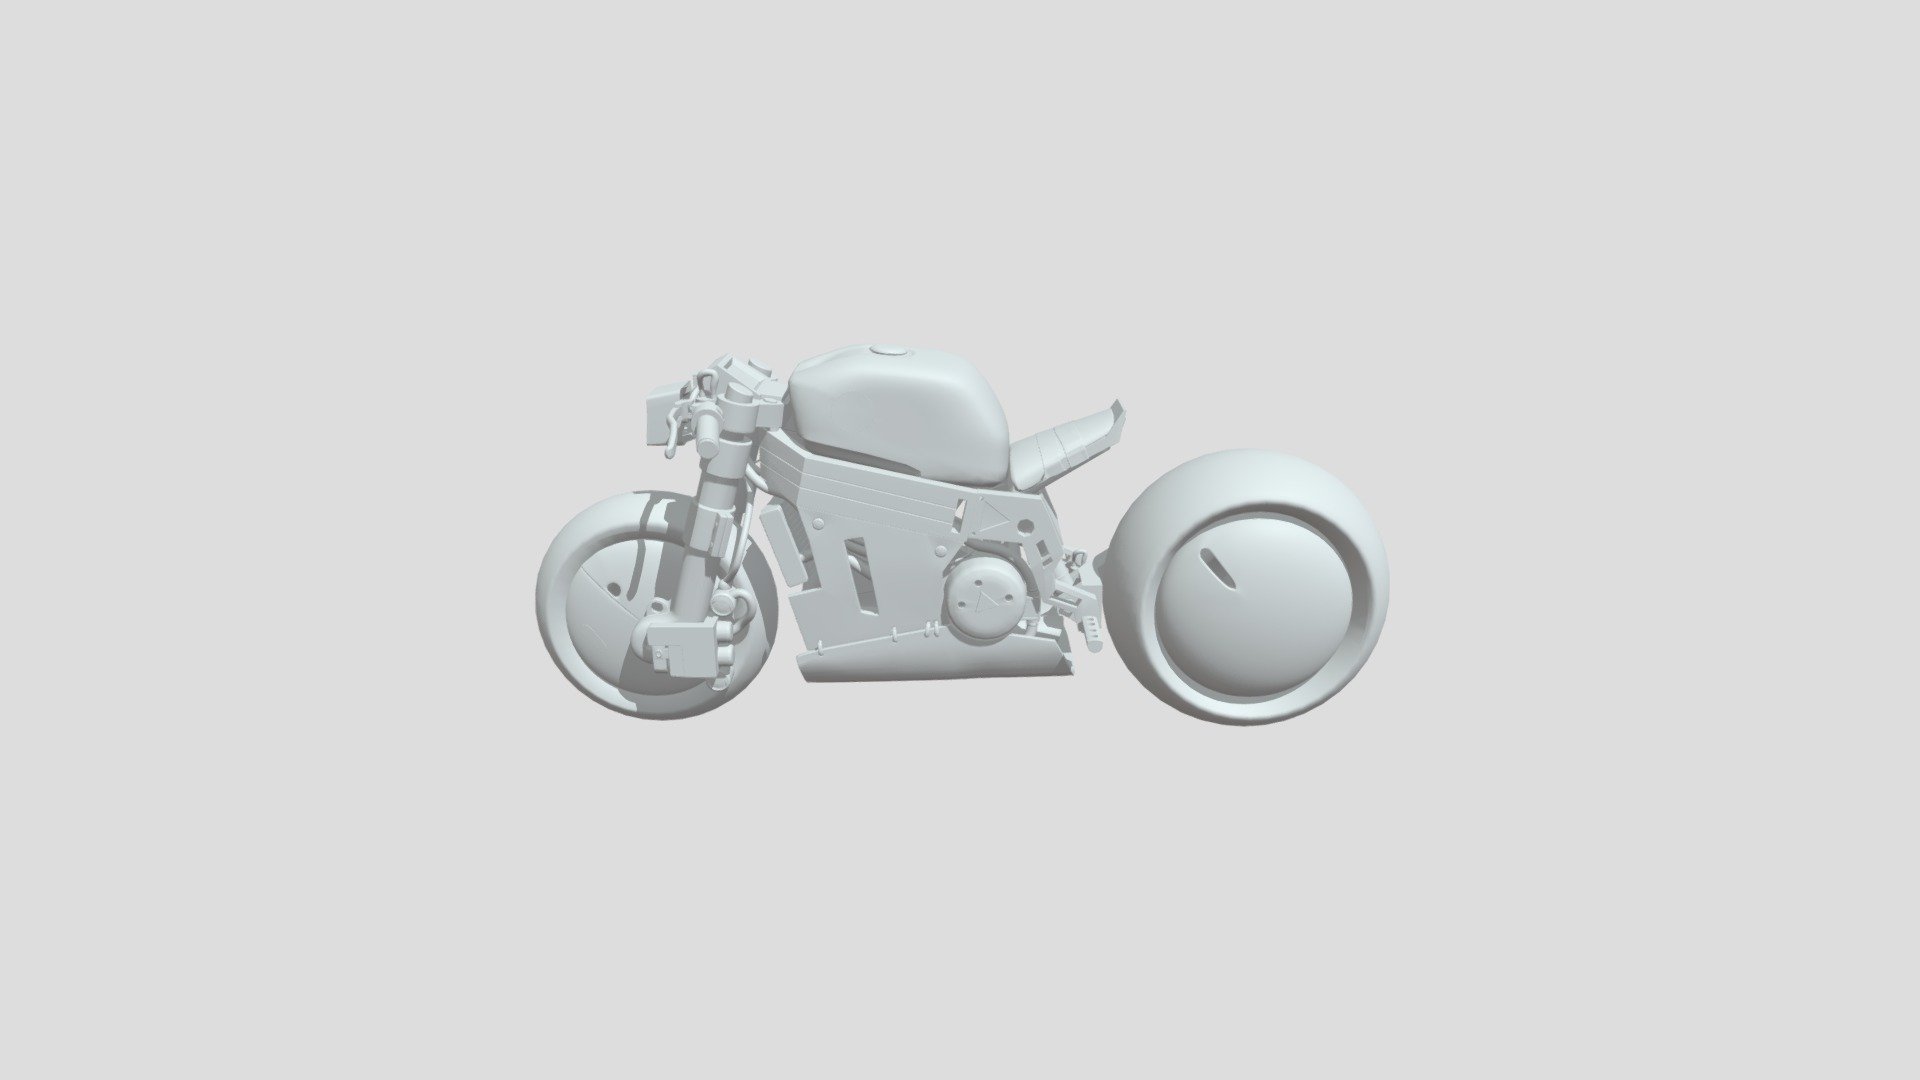 Akira style motorcycle modeled in Maya - Yamagata Motorcycle - 3D model by Ryan Cardona (@RyanCardona) 3d model